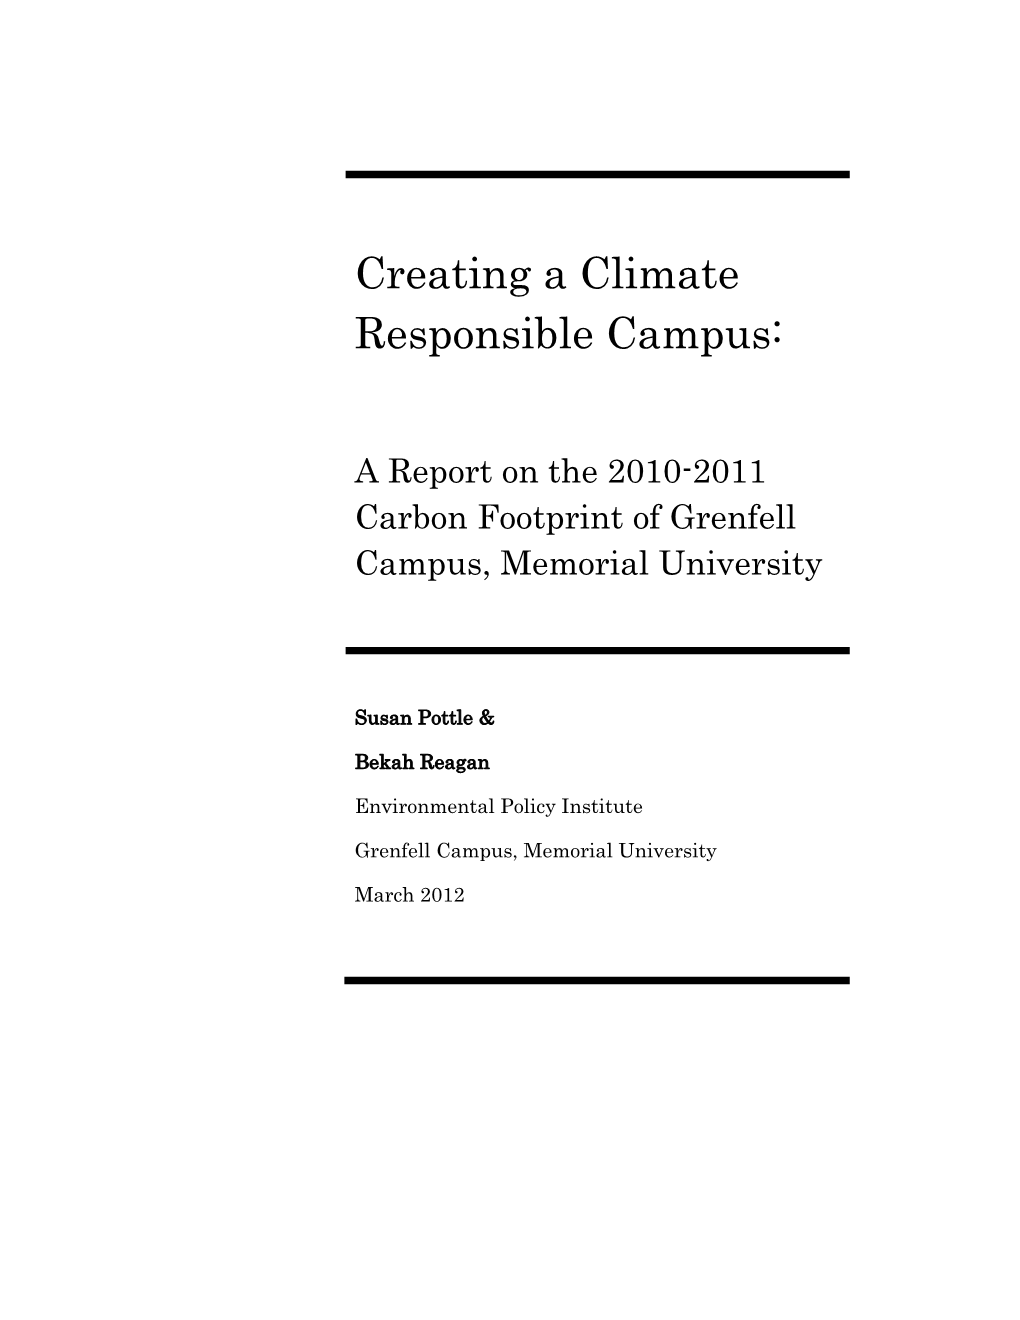 2010-2011 Carbon Footprint, Grenfell Campus, Memorial University 2